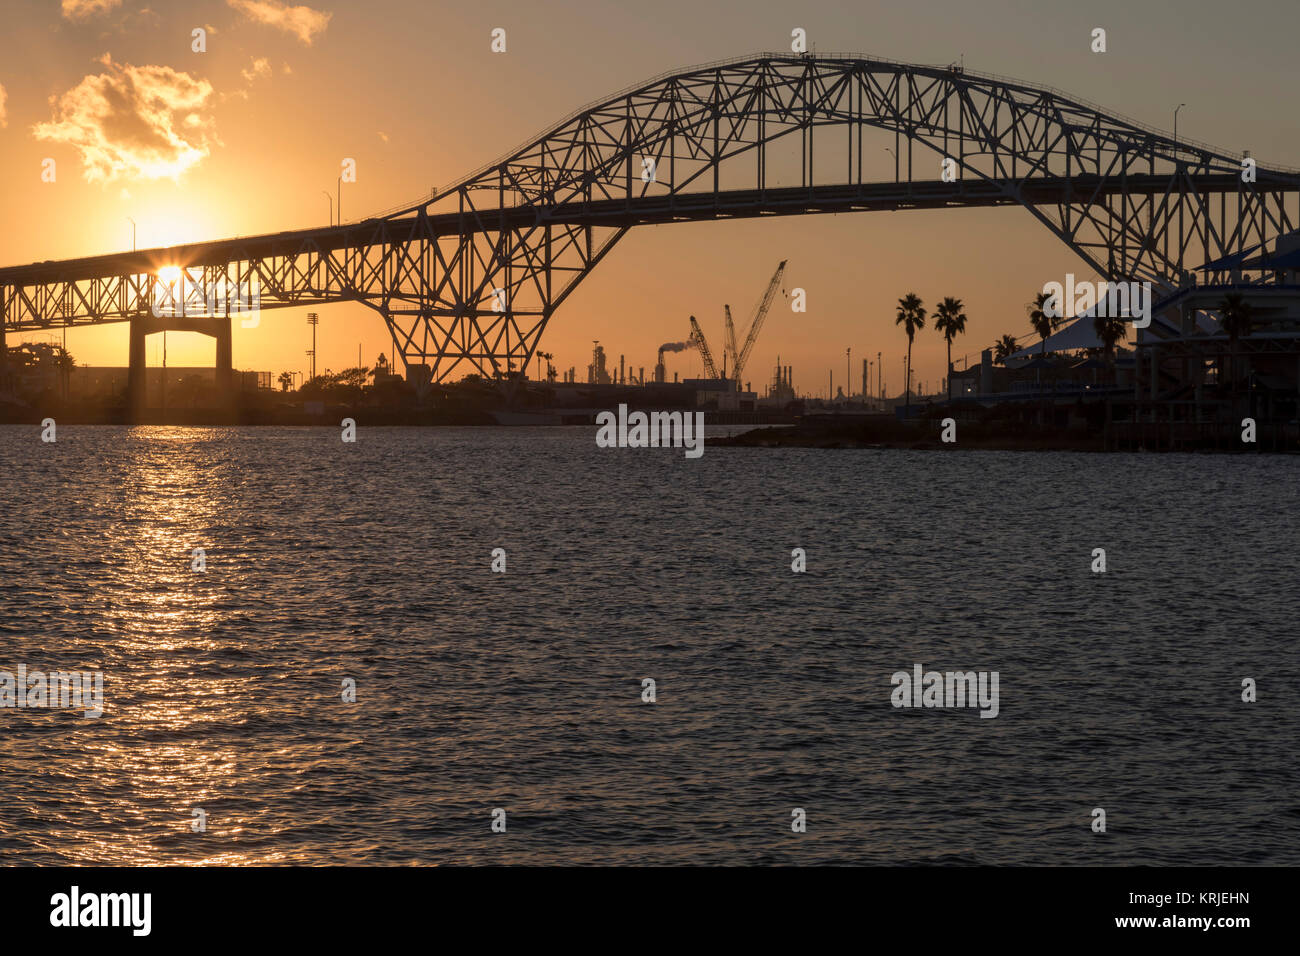 Corpus Christi, Texas - der Corpus Christi Harbour Bridge trägt US Highway 181 über die Corpus Christi Ship Channel. Stockfoto